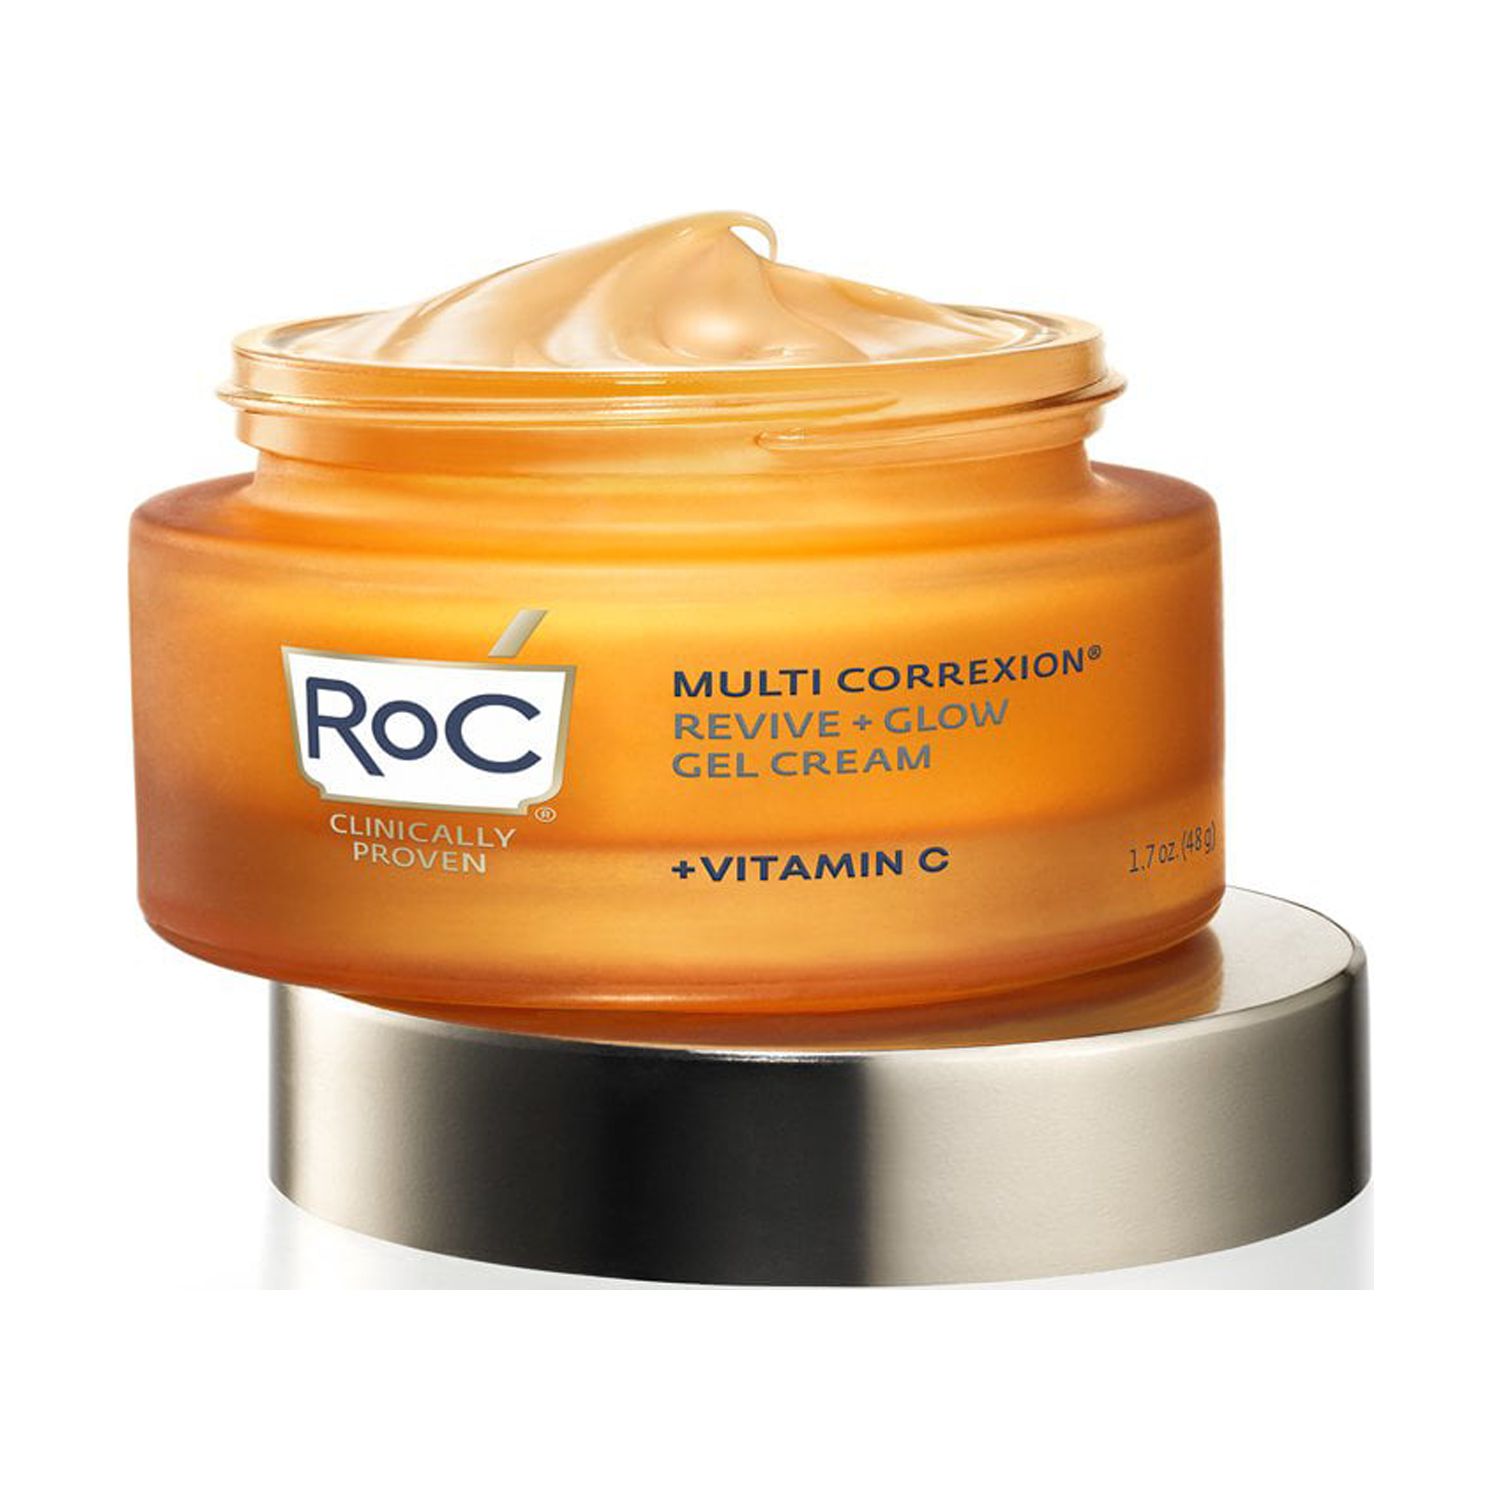 RoC Multi Correxion Brightening Anti-Aging Gel Moisturizer with Vitamin C, for Dark Spots & Uneven Tone, 1.7 oz - image 9 of 13